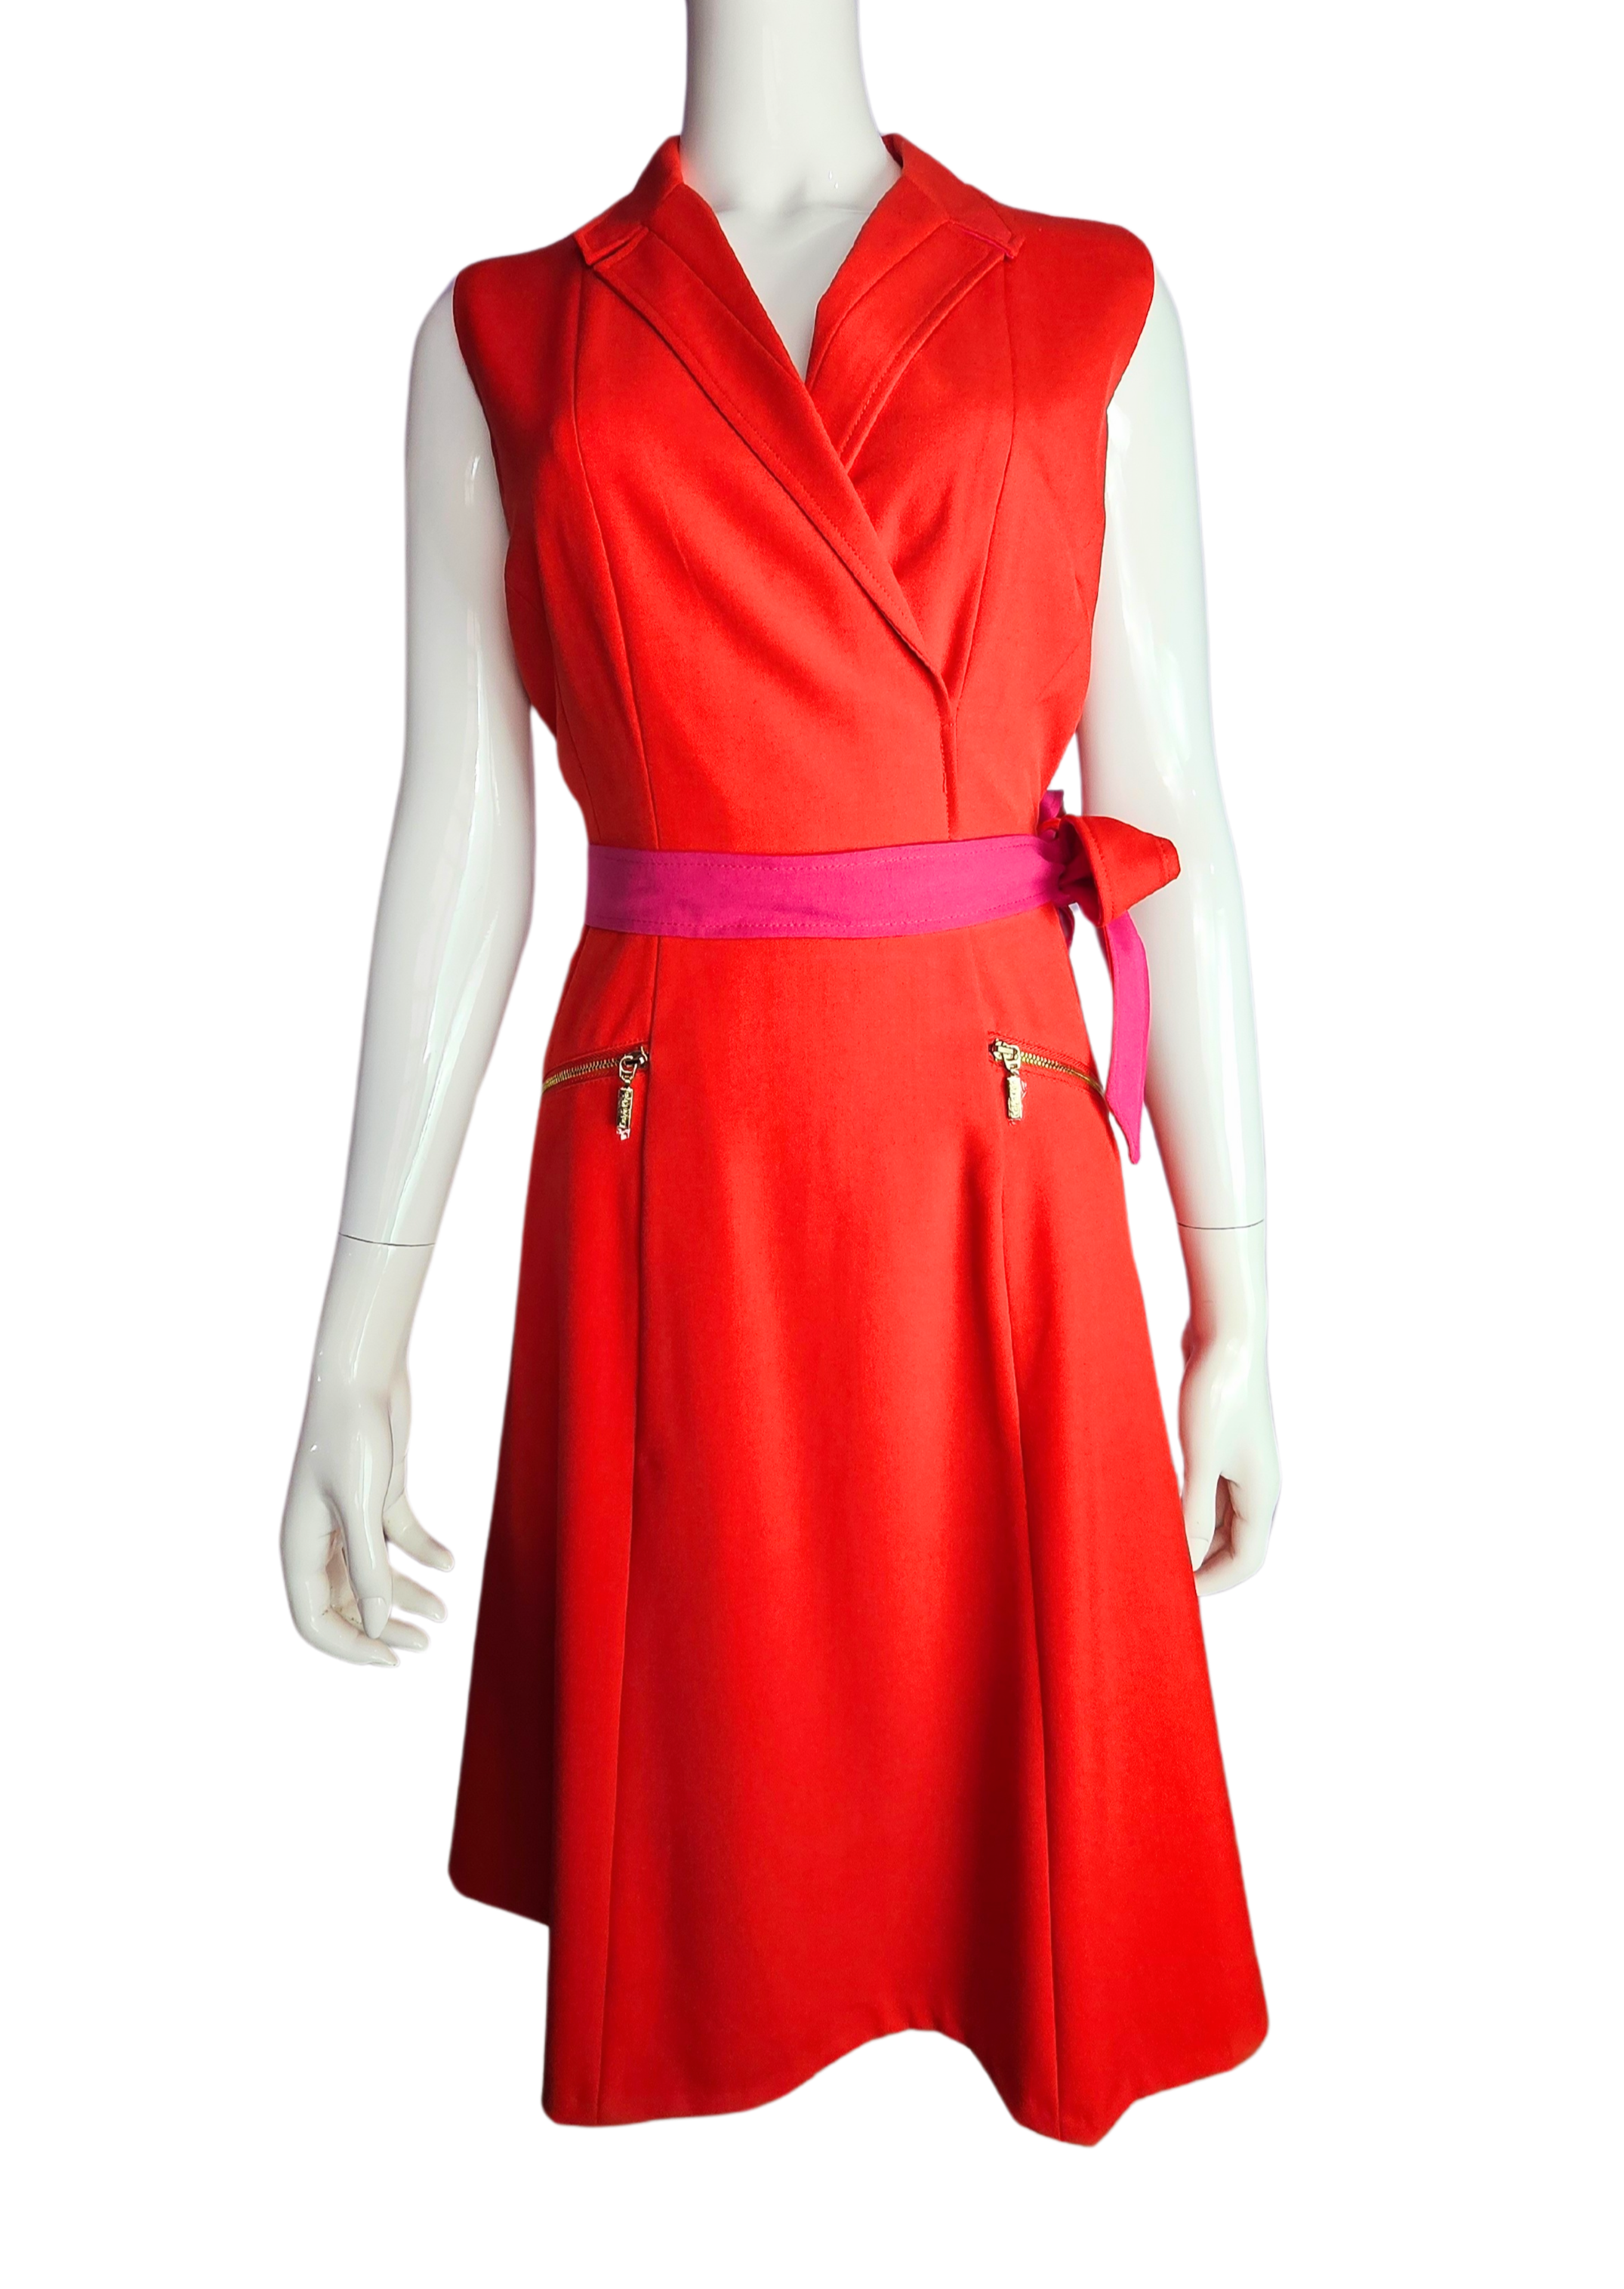 Women's Red and Fushia Dress